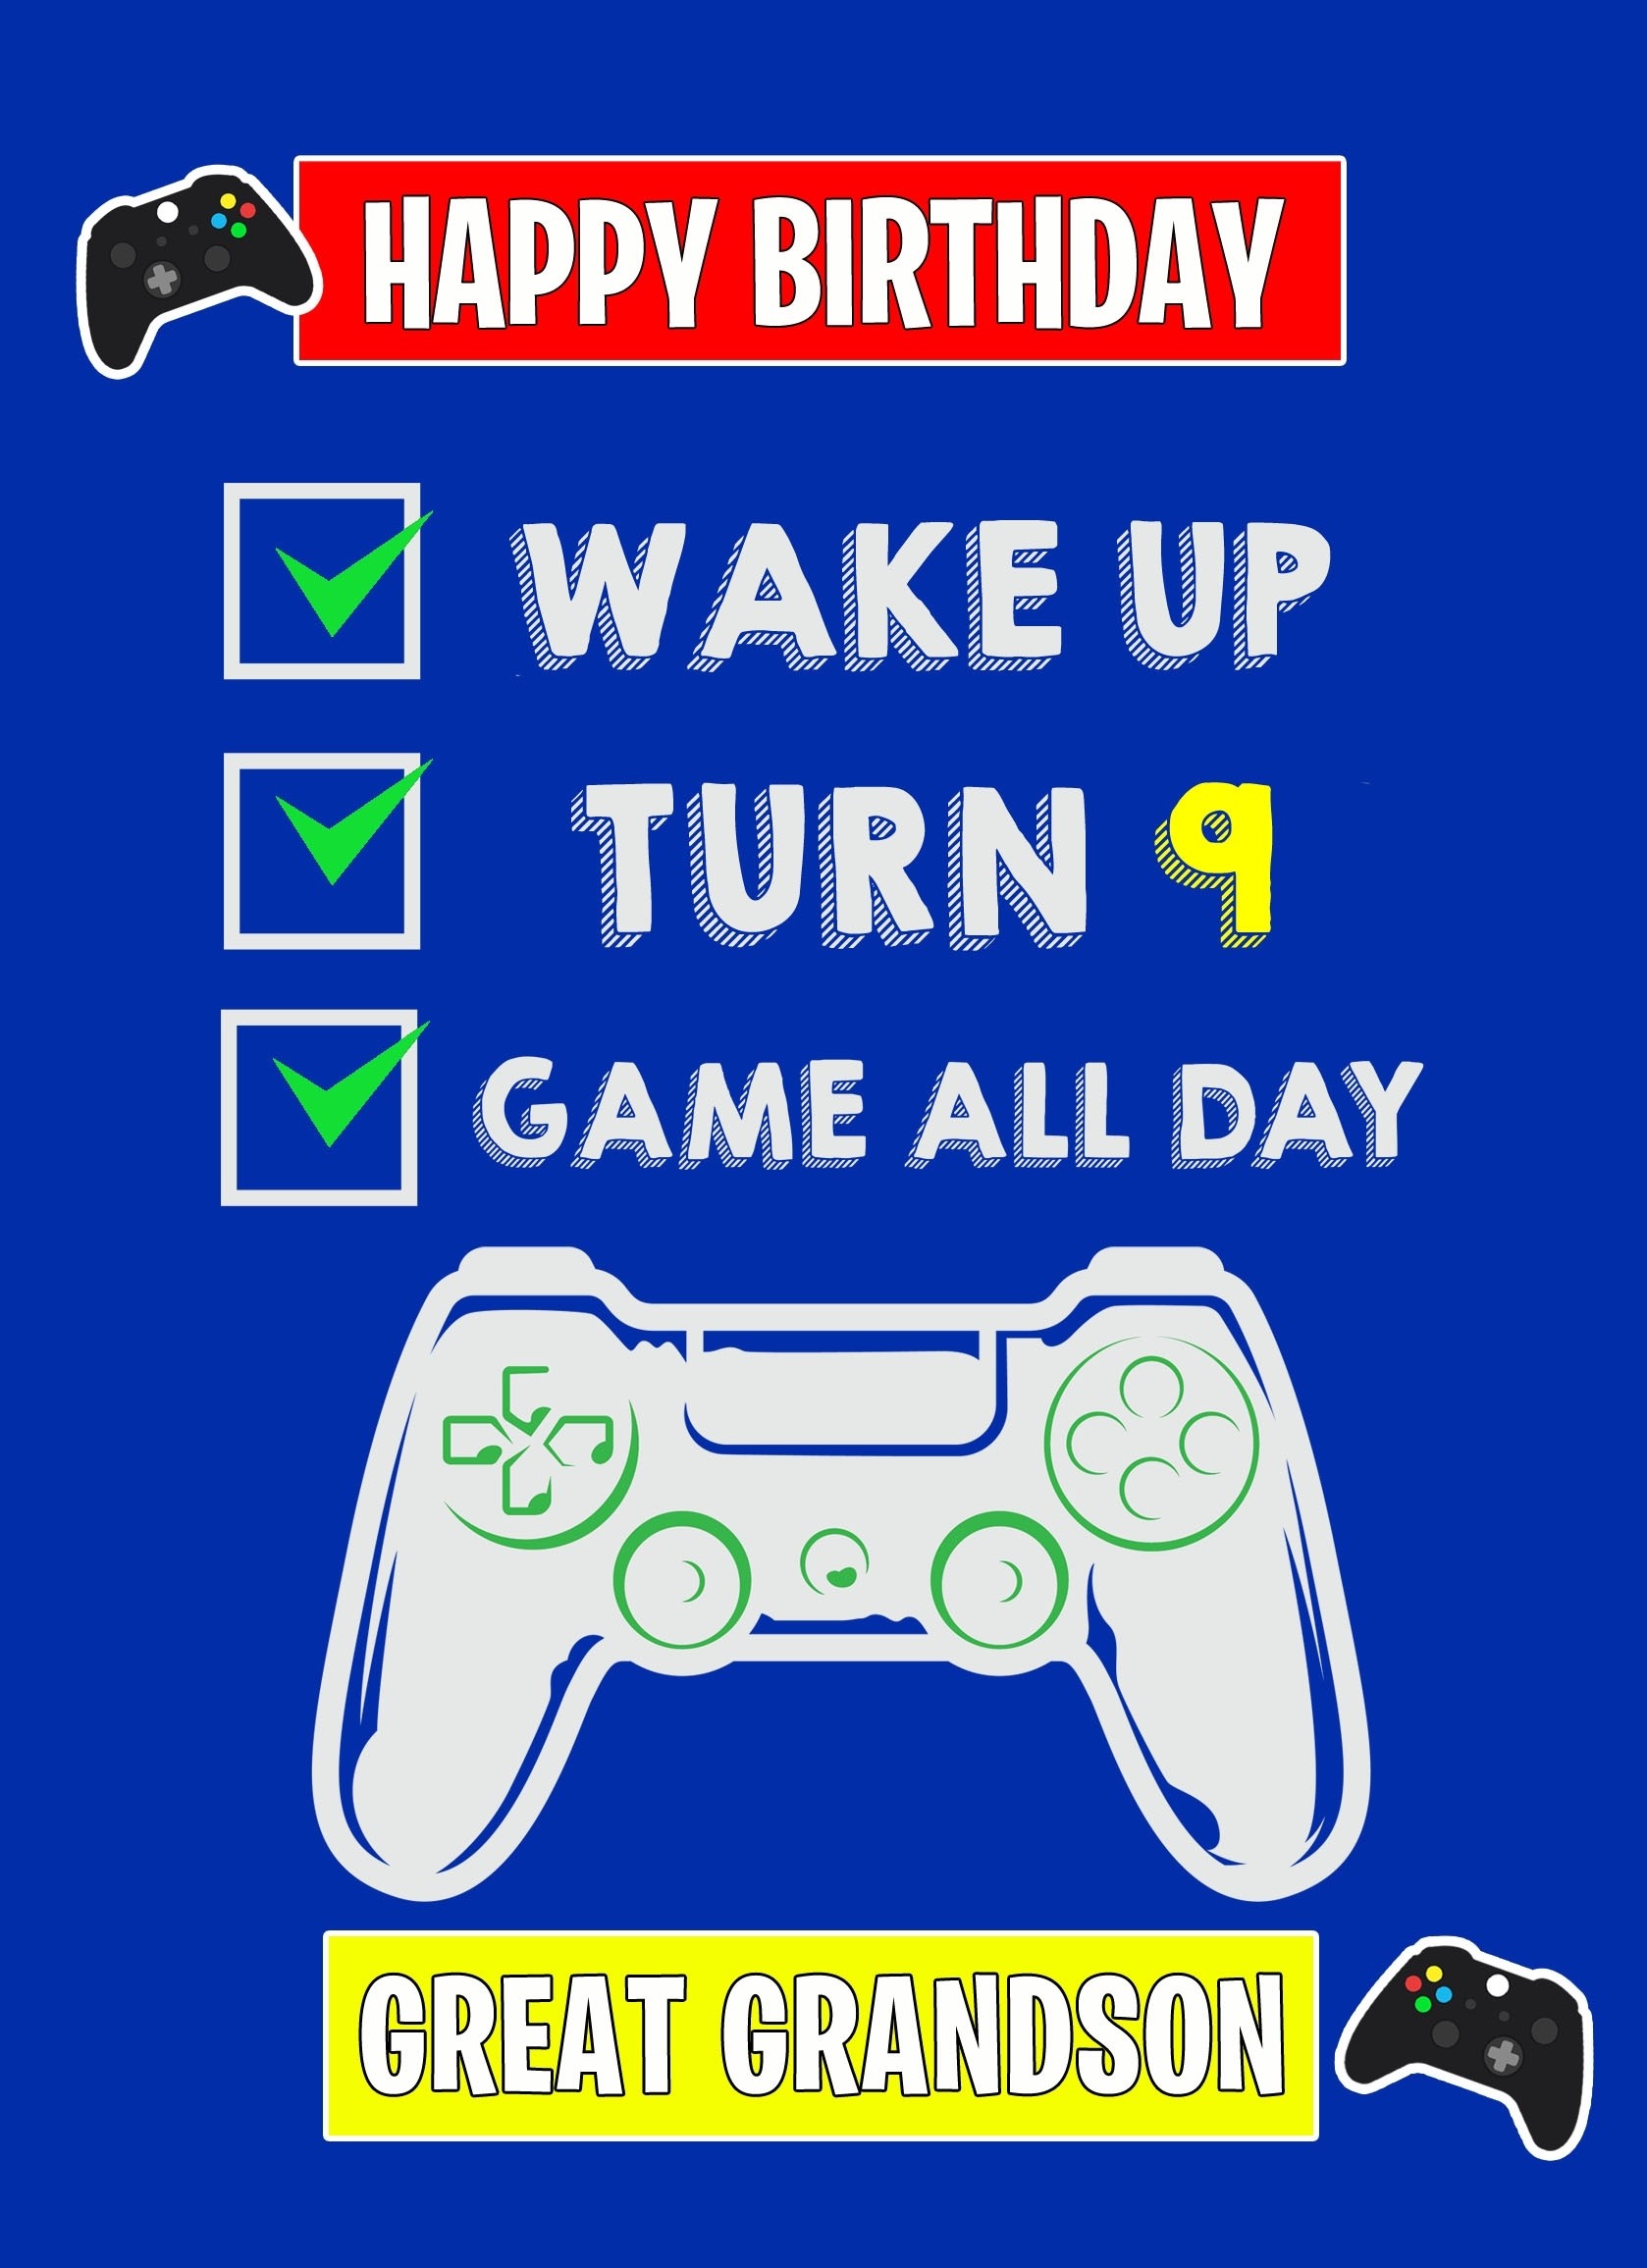 9th Level Gamer Birthday Card For Great Grandson